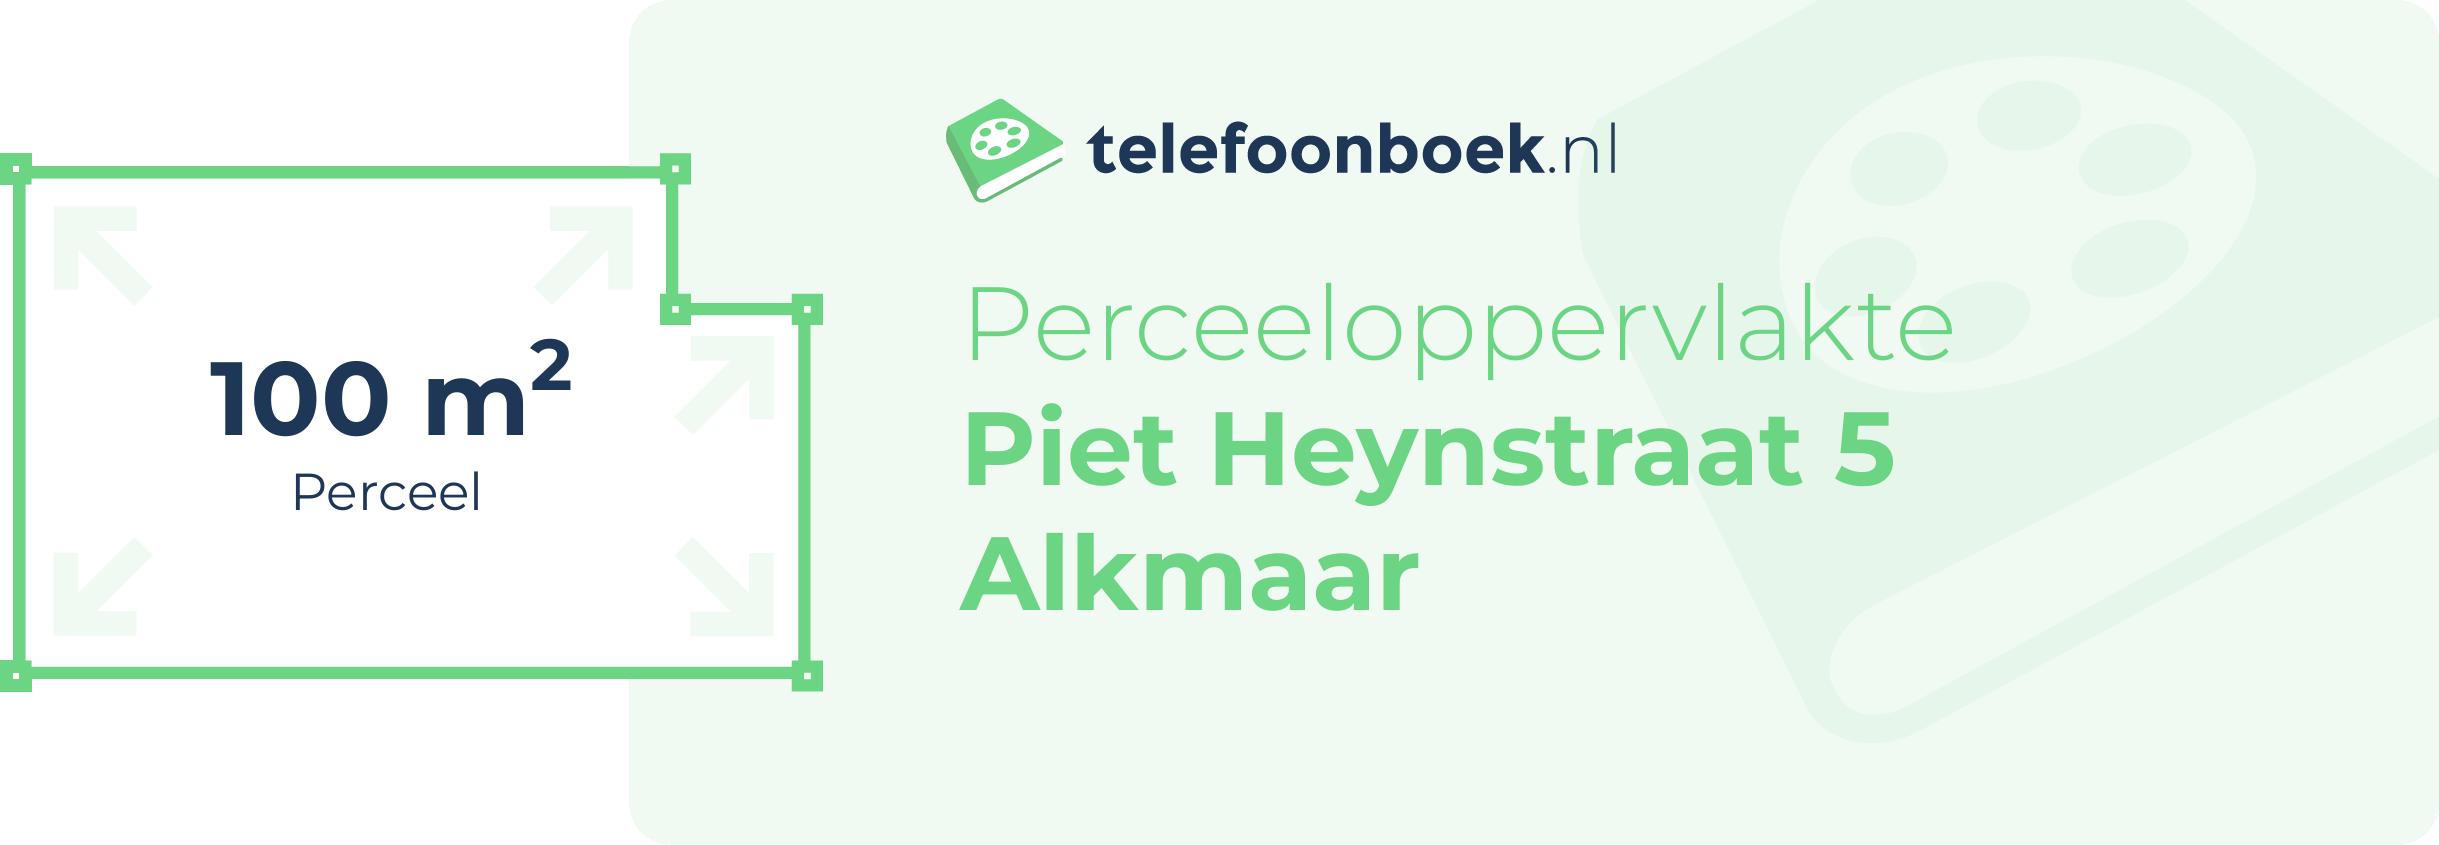 Perceeloppervlakte Piet Heynstraat 5 Alkmaar